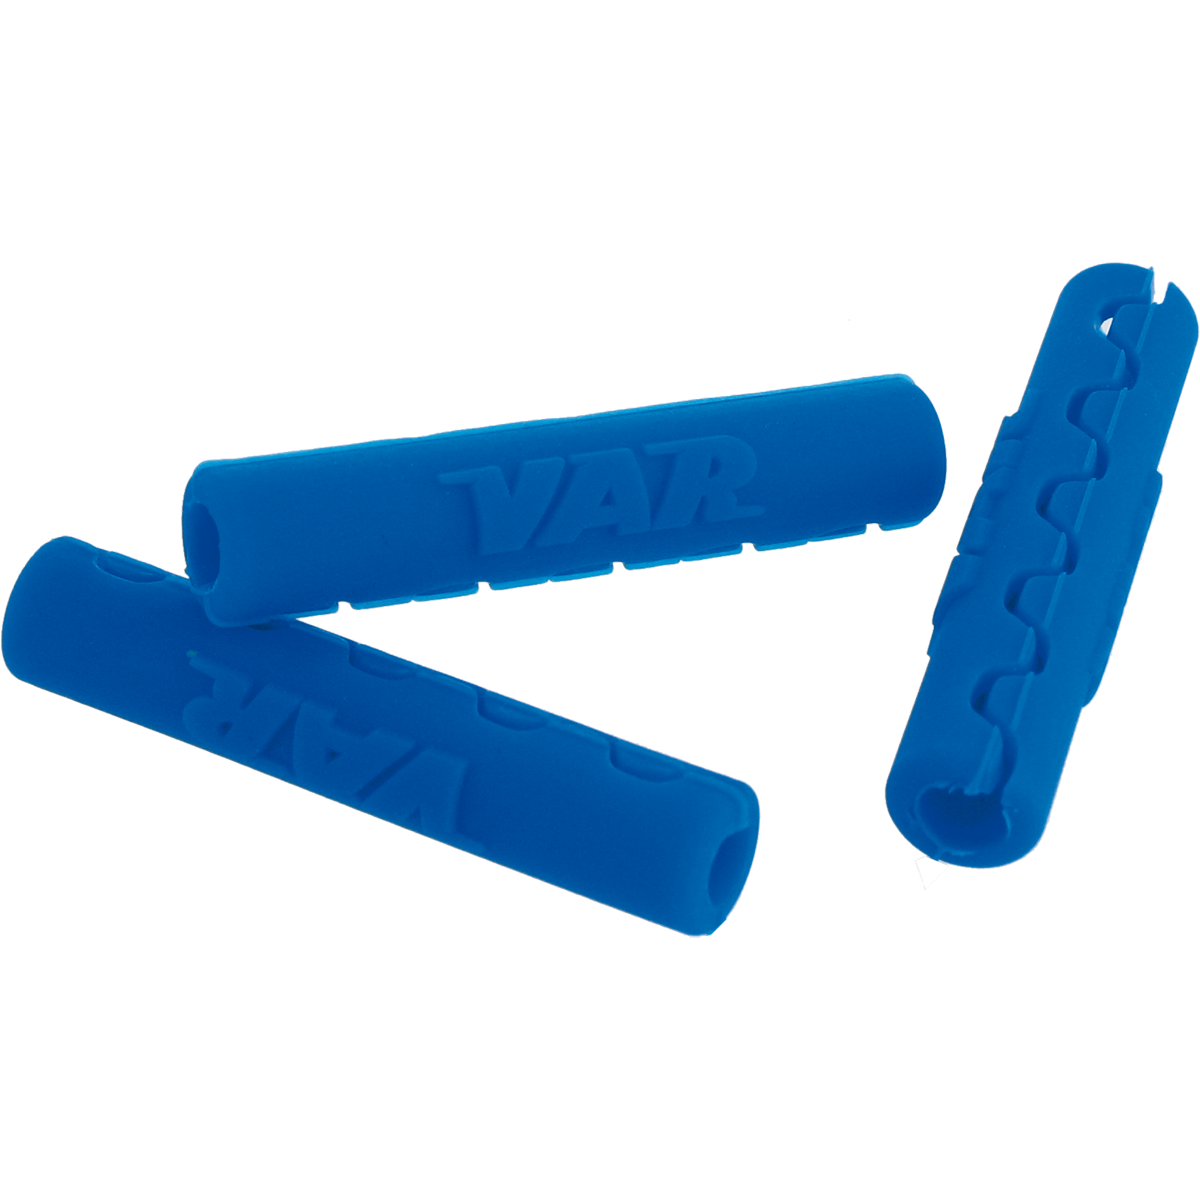 Bottle of 50 frame protectors for 5mm housing - blue